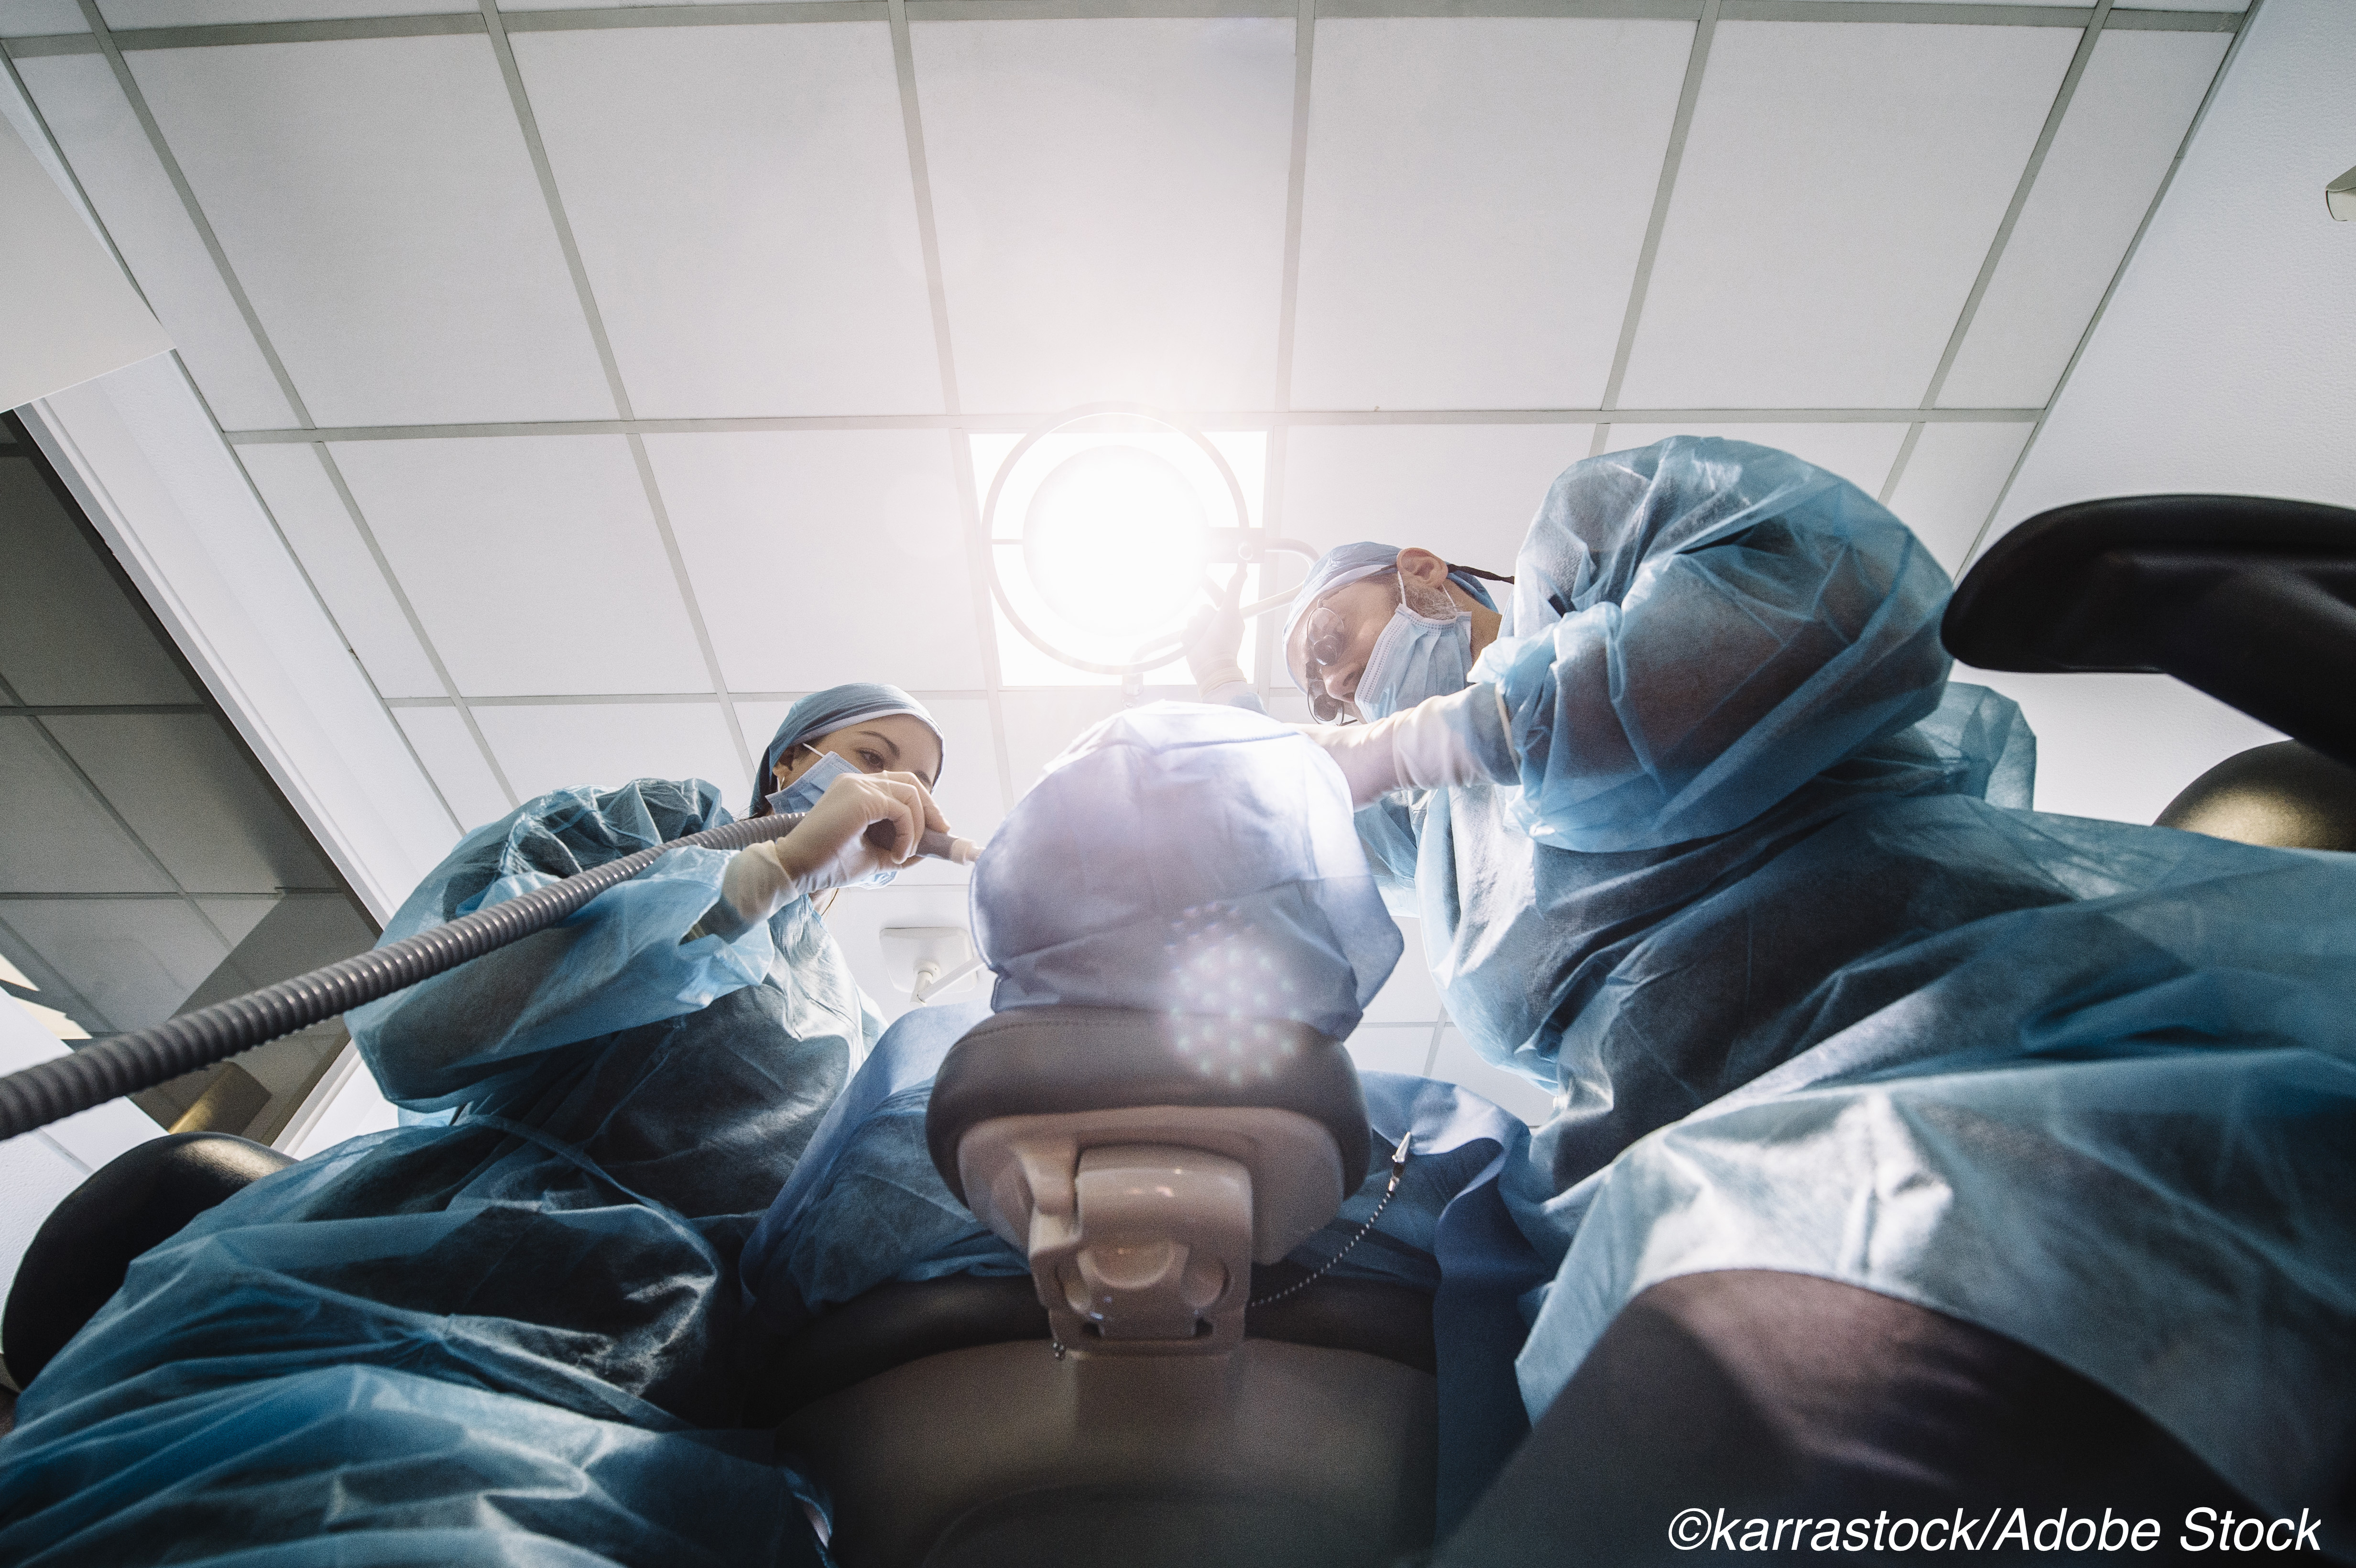 Upper Airway Surgery Reduces Apnea/Hypoxea Events in OSA